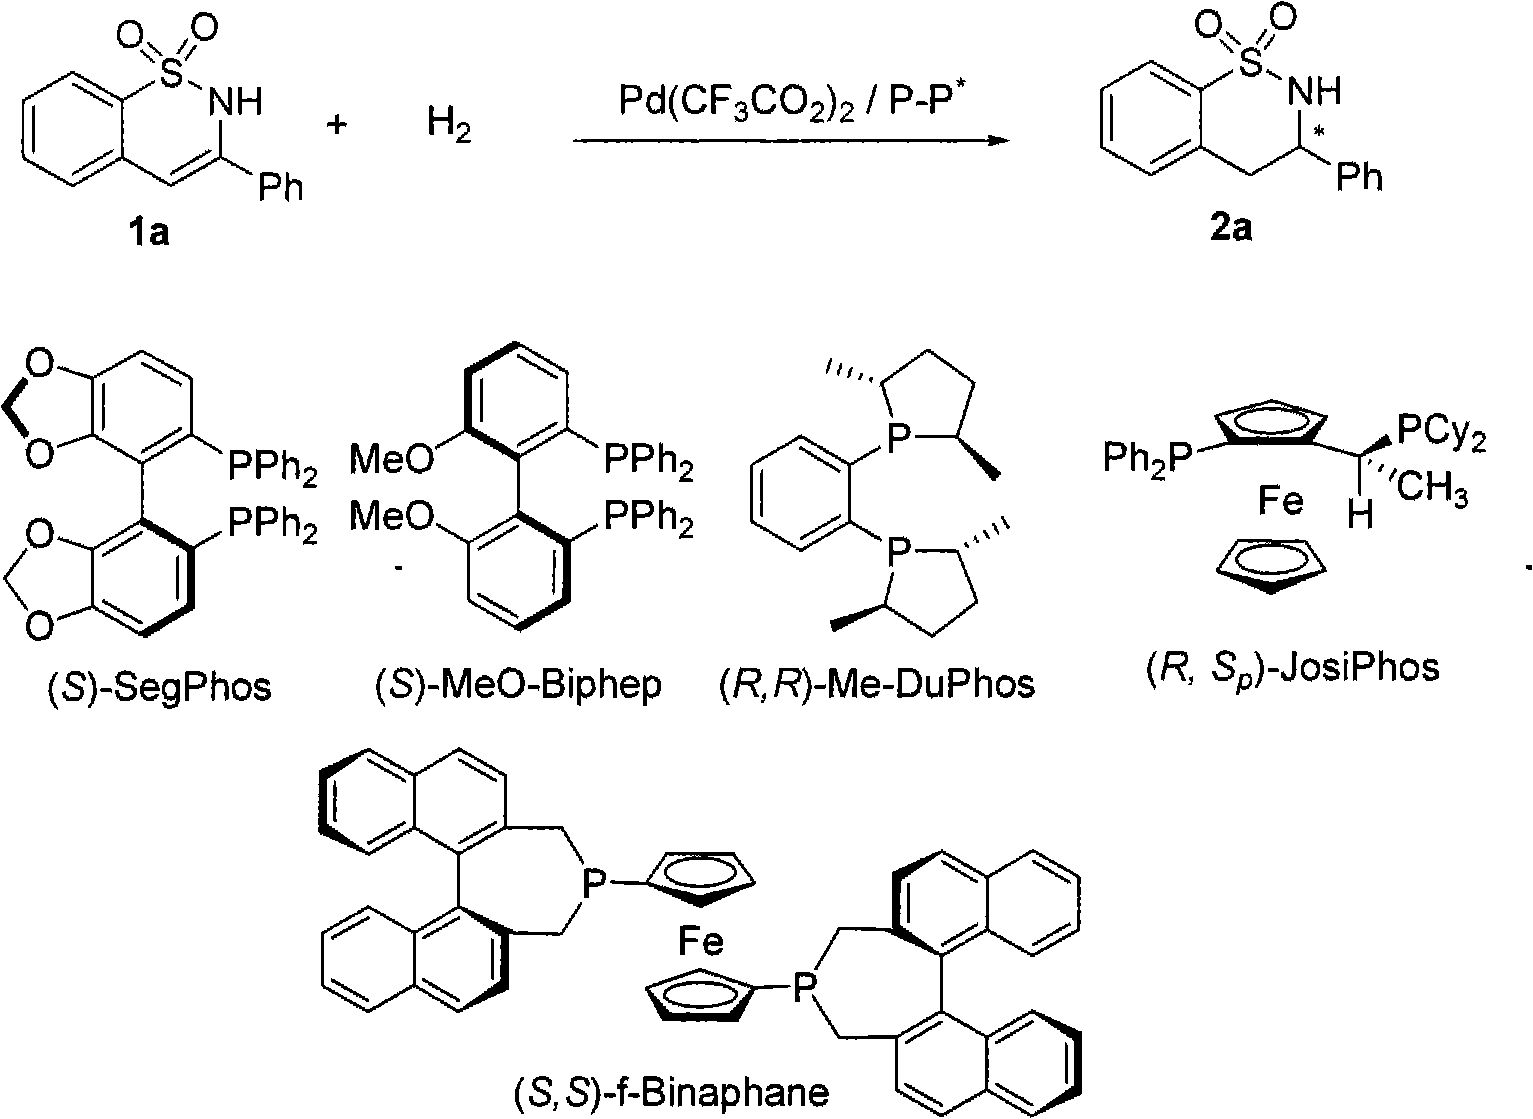 Method for synthesizing chiral benzosultam via palladium-catalytic asymmetric hydrogenation